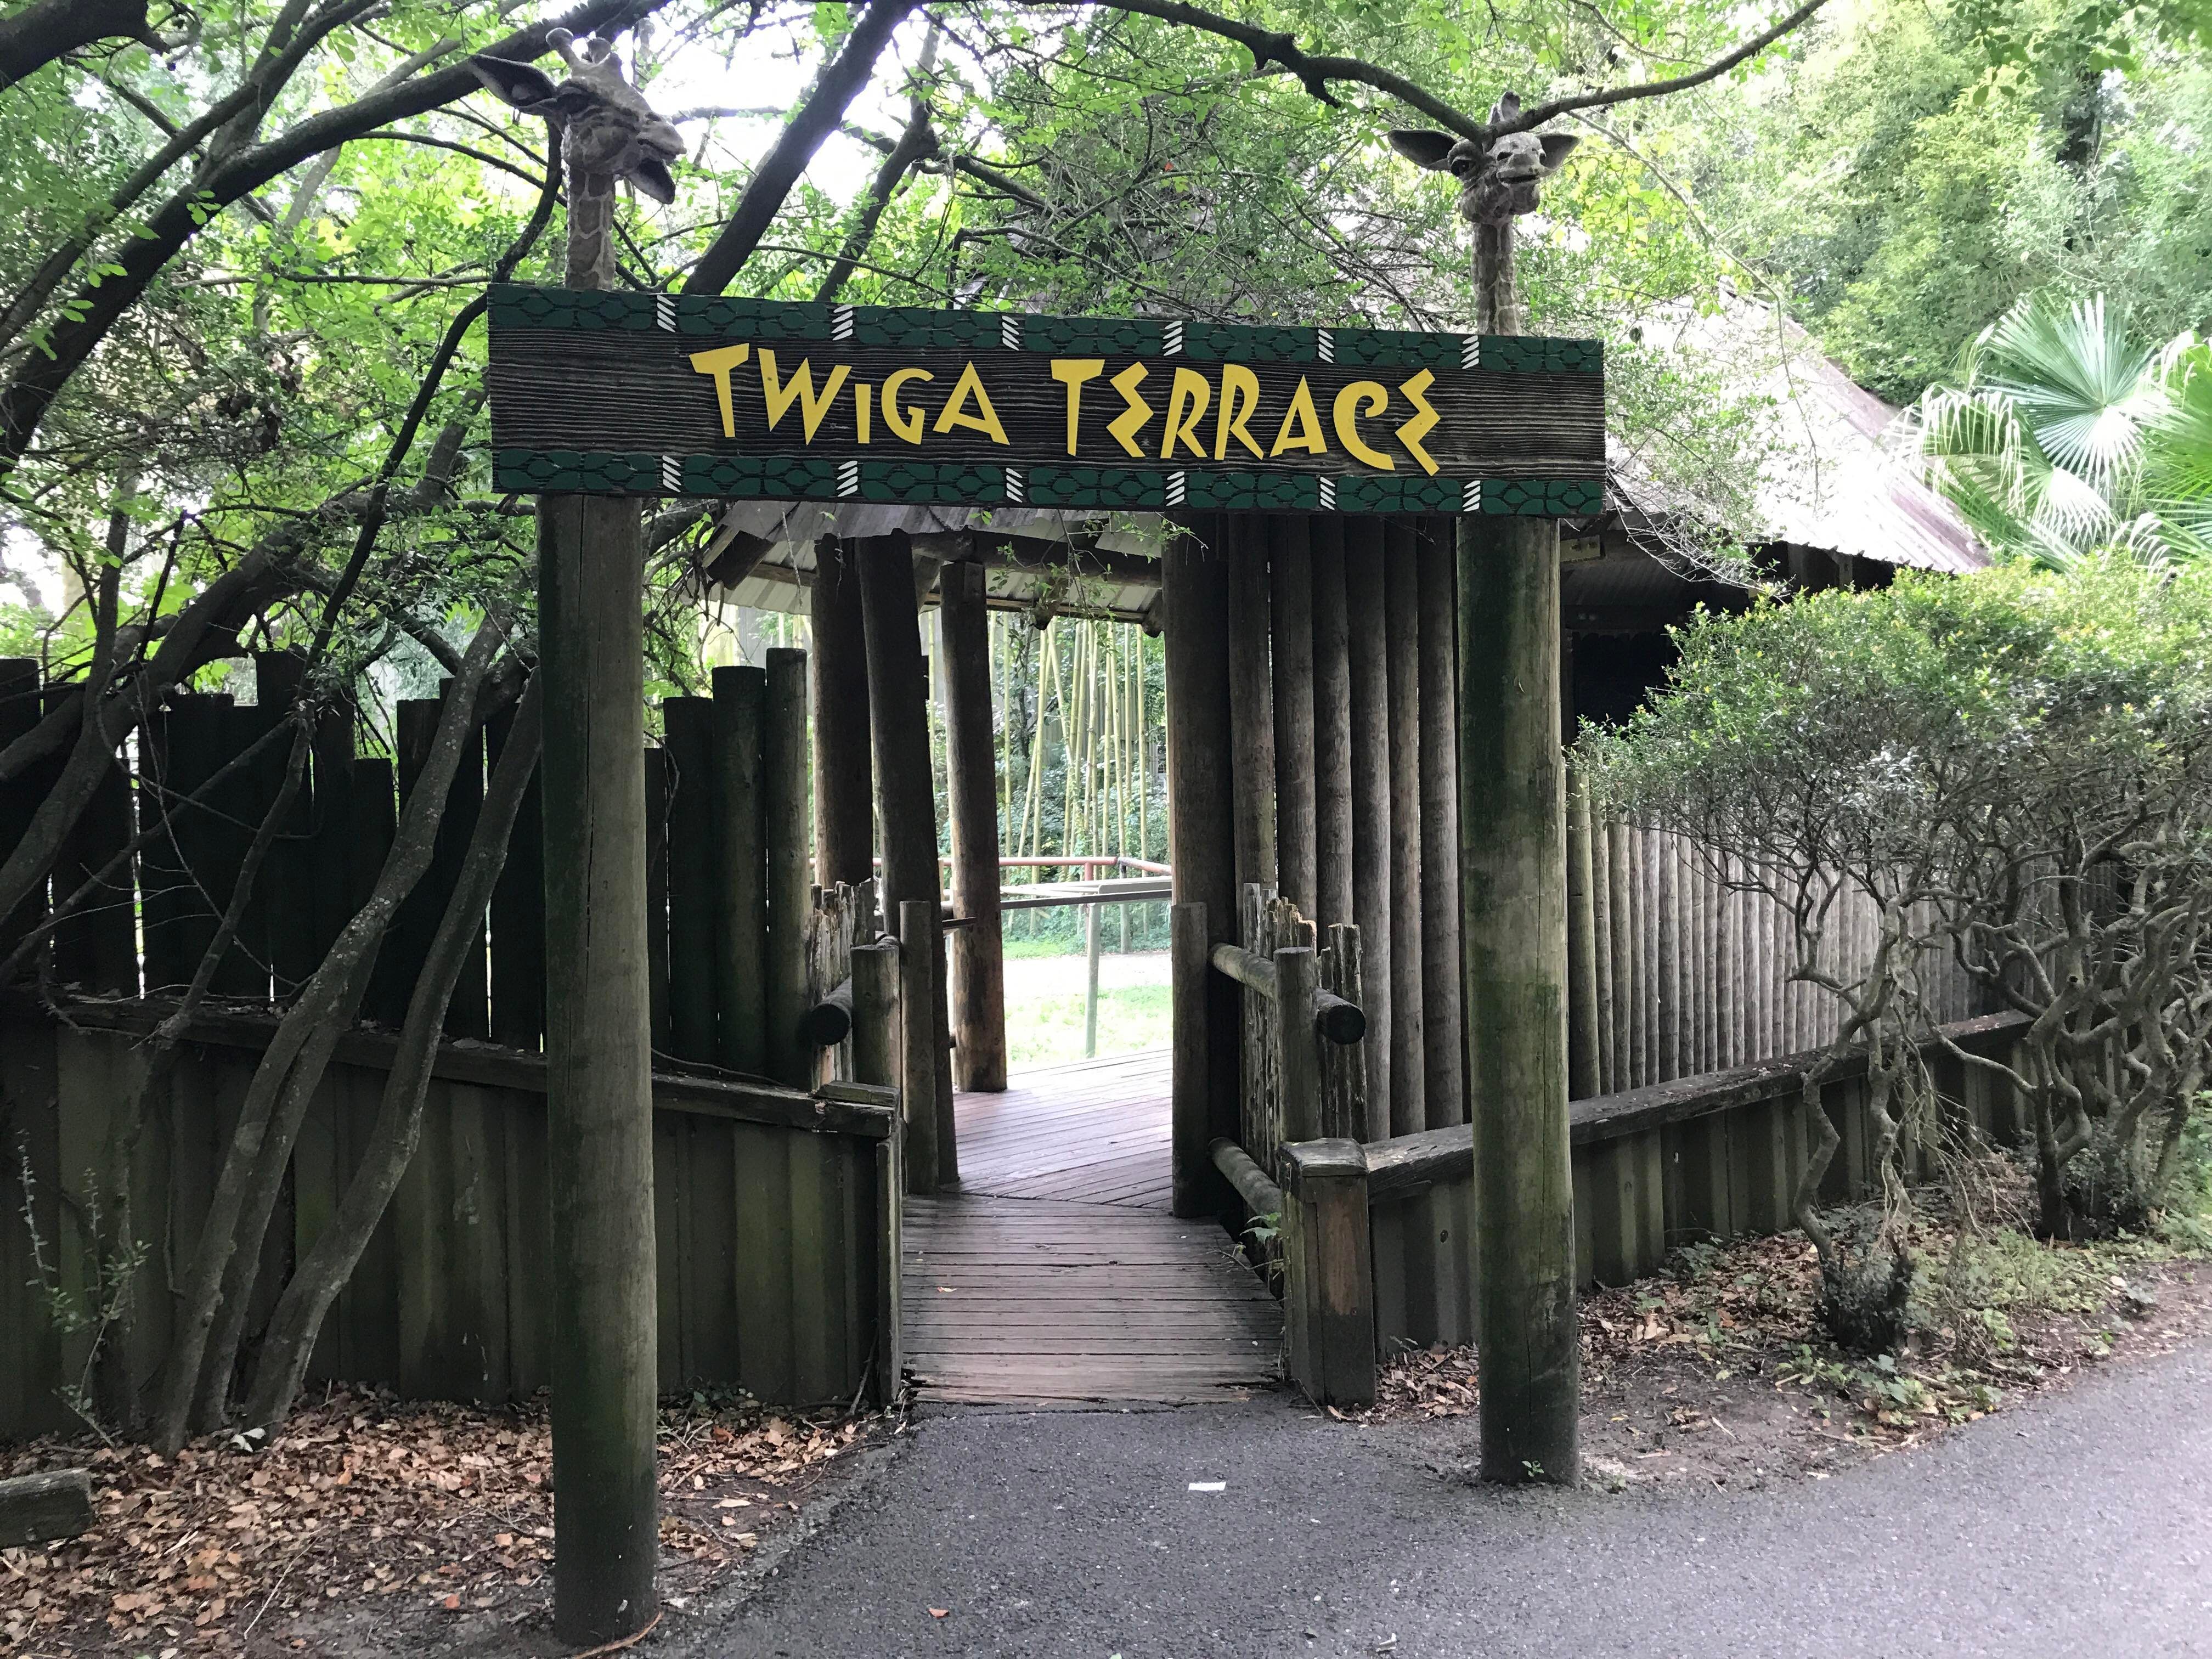 Photo shows the entrance to the giraffe habitat at Audubon Zoo. A sign says "Twiga Terrace."